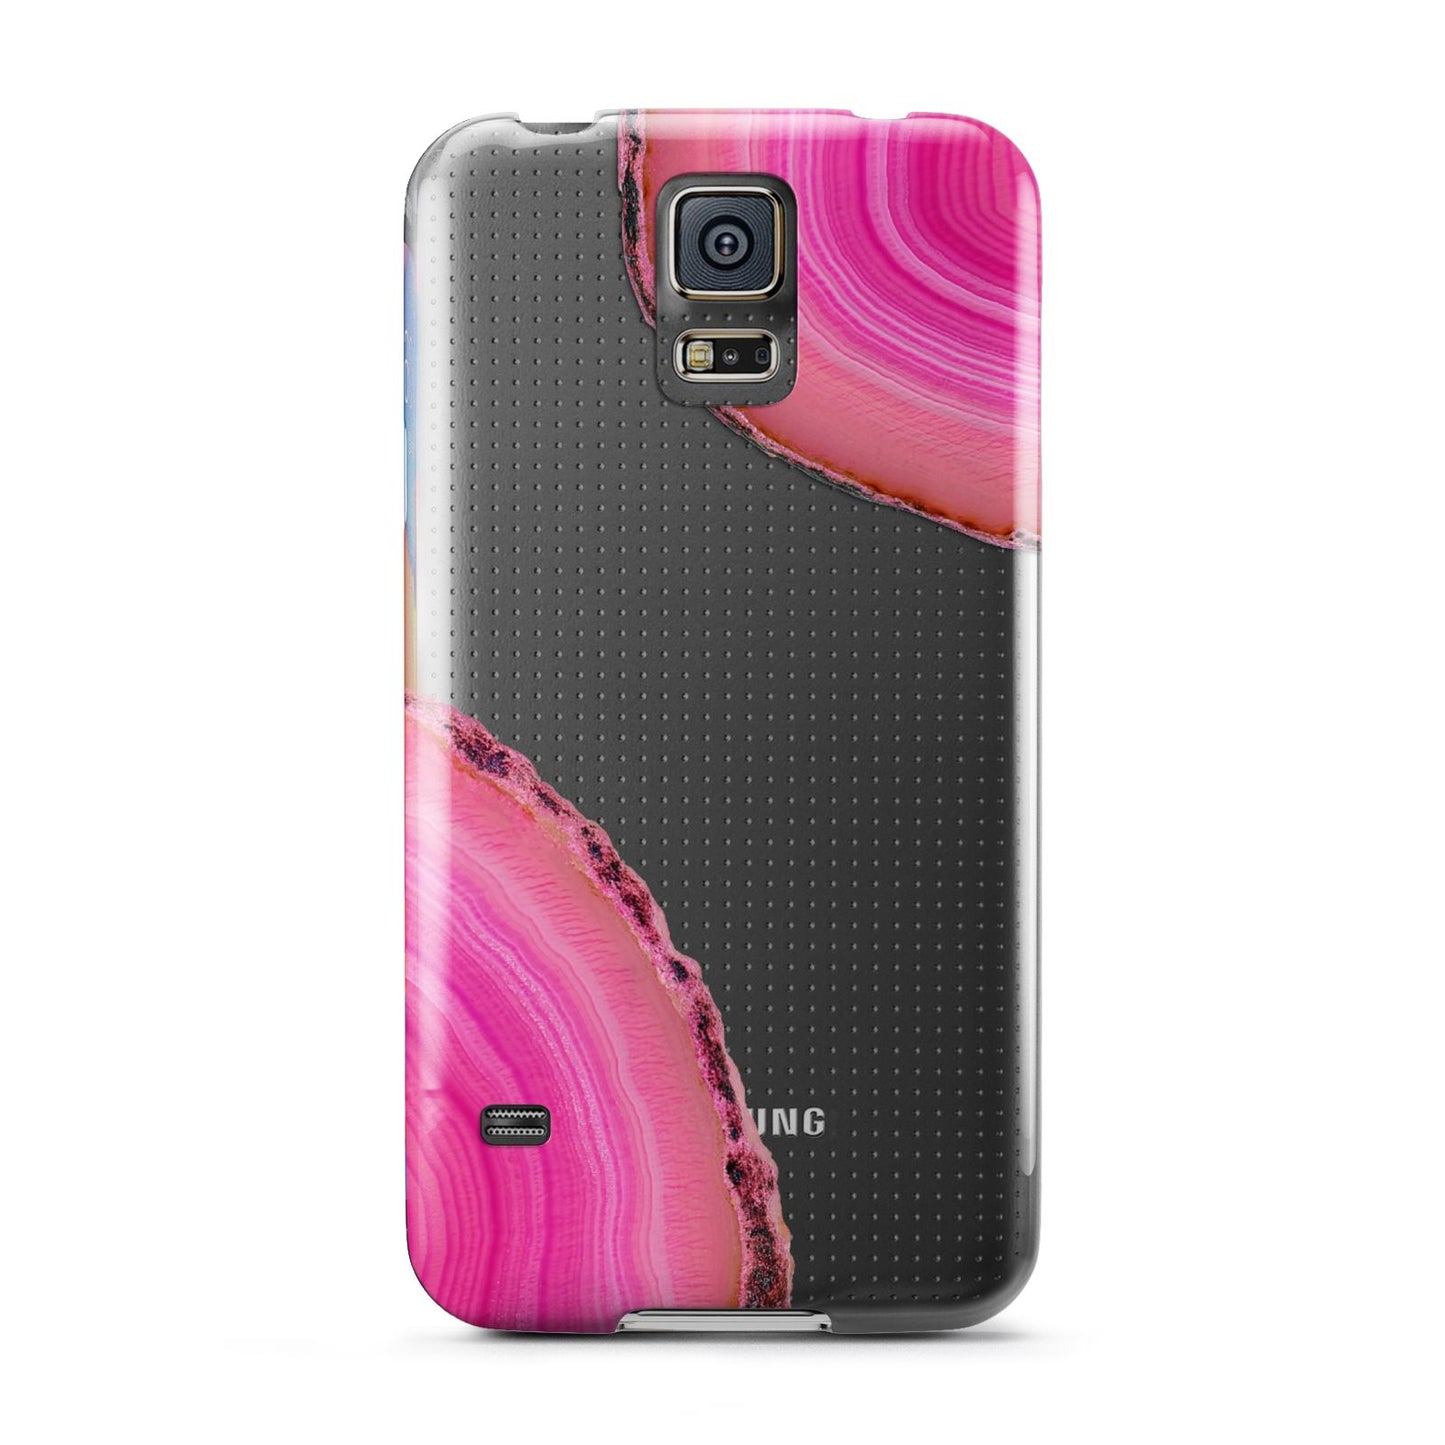 Agate Bright Pink Samsung Galaxy S5 Case